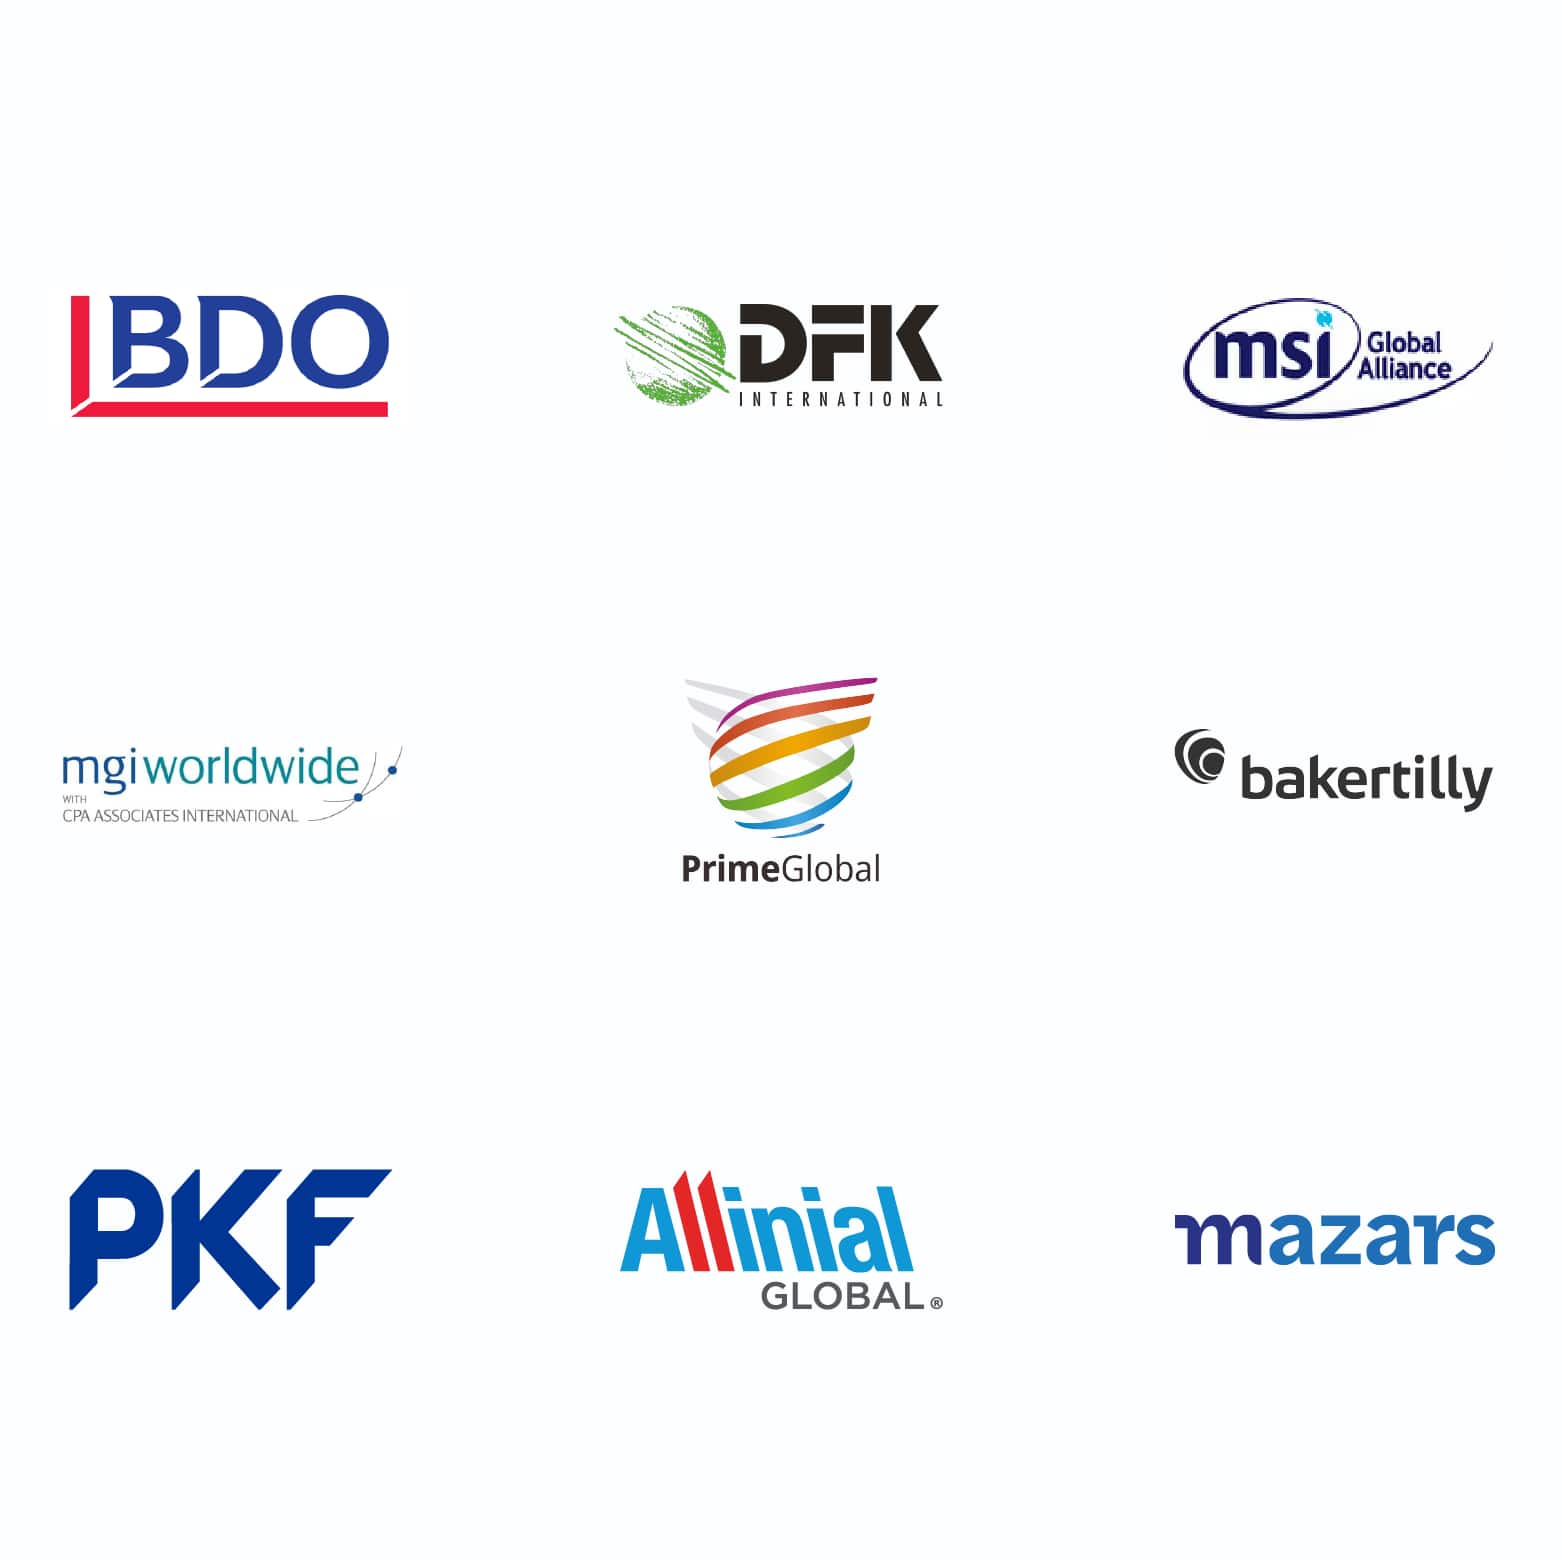 A group of business logos: BDO, Johnston Carmichael, MNP, KPMG, PWC, Smith & Williamson, Deloitte, Grant Thornton, CRI